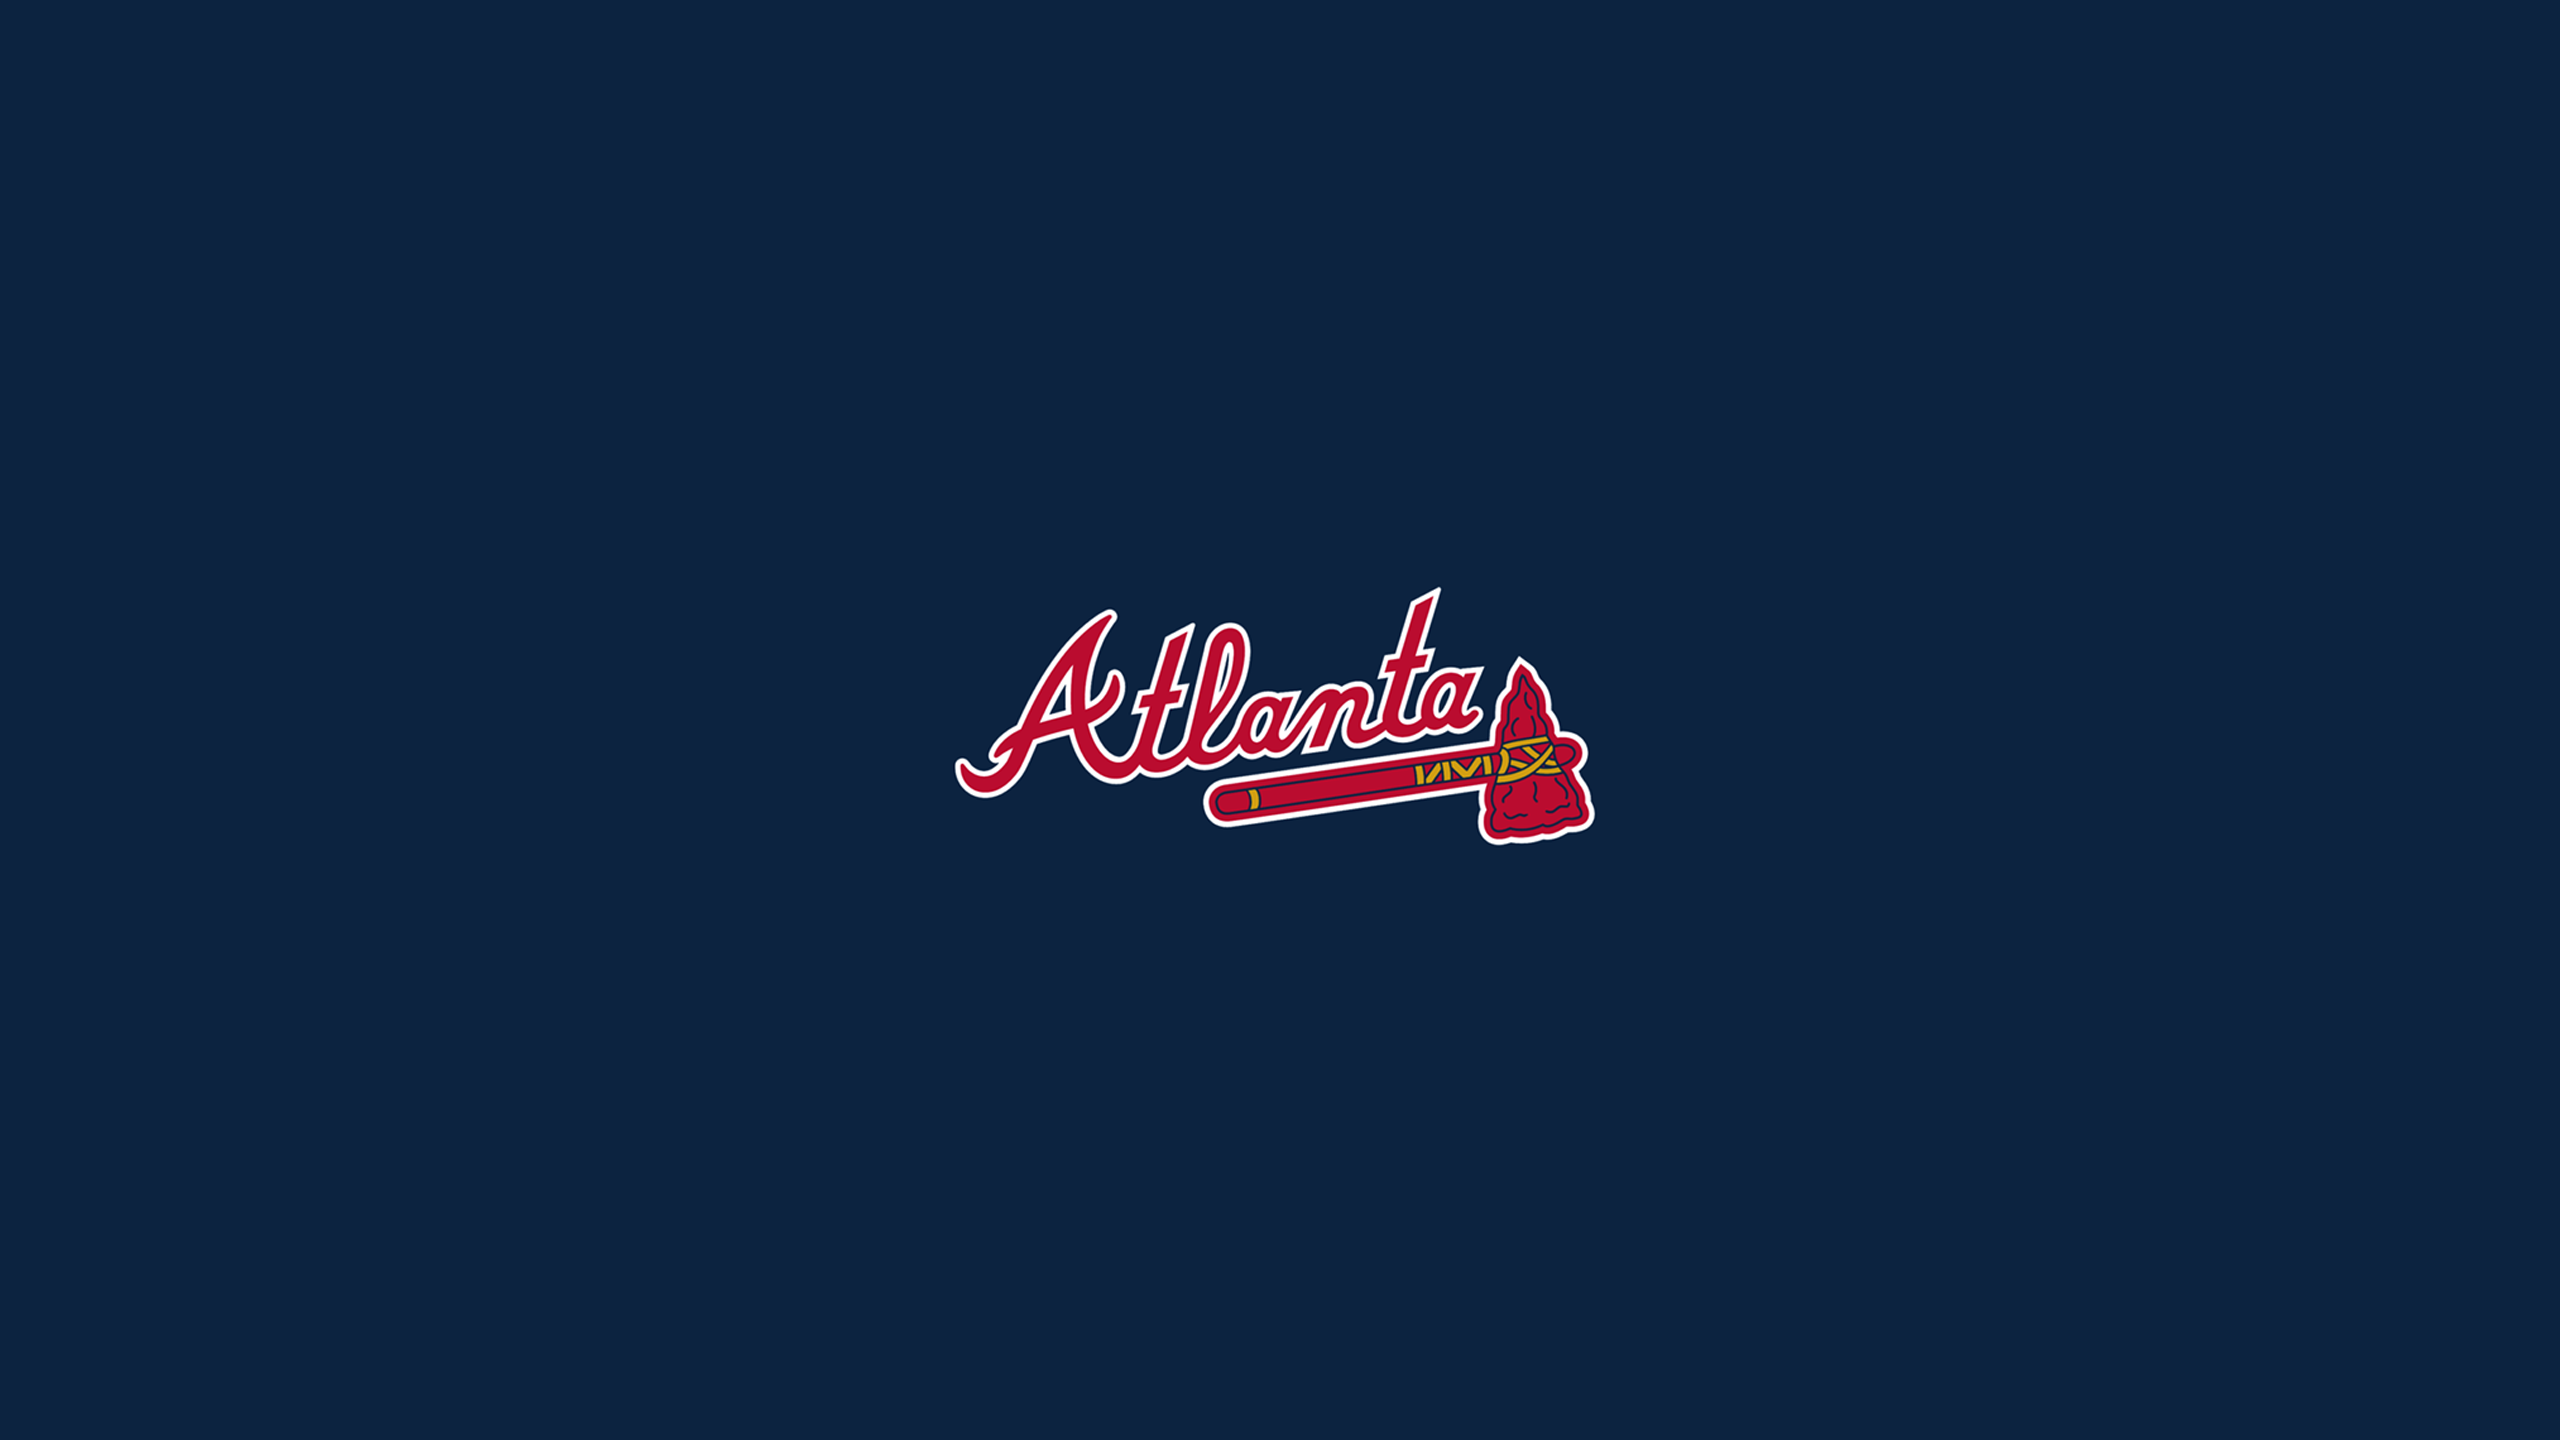 Atlanta Braves - MLB - Square Bettor